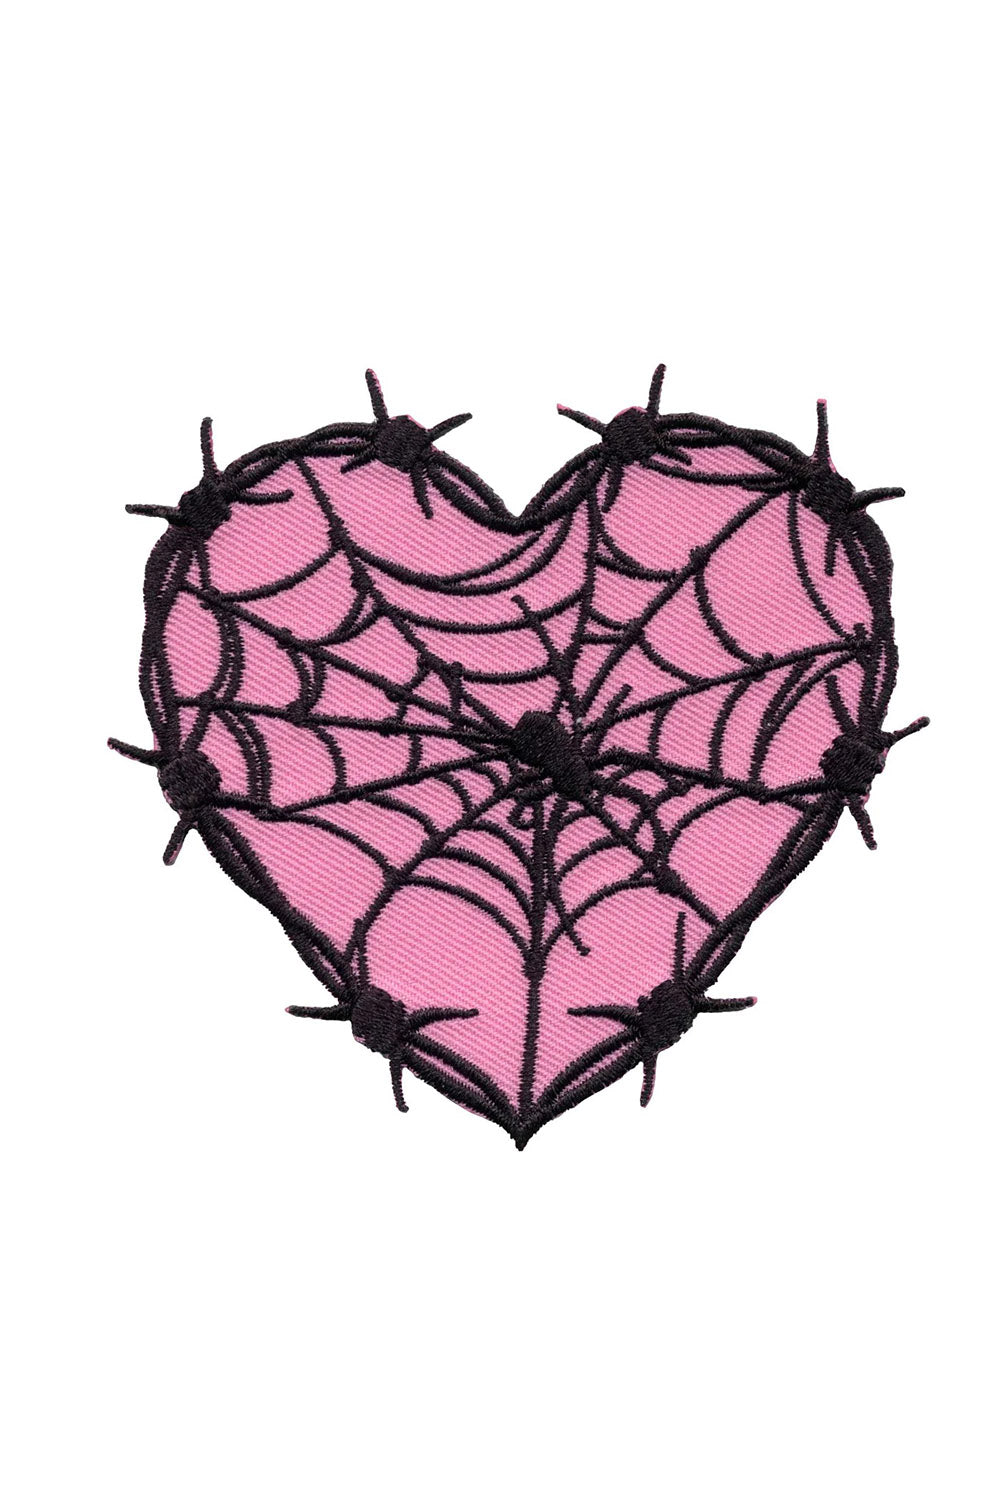 Barbed Wire Spiderweb Patch [PINK]